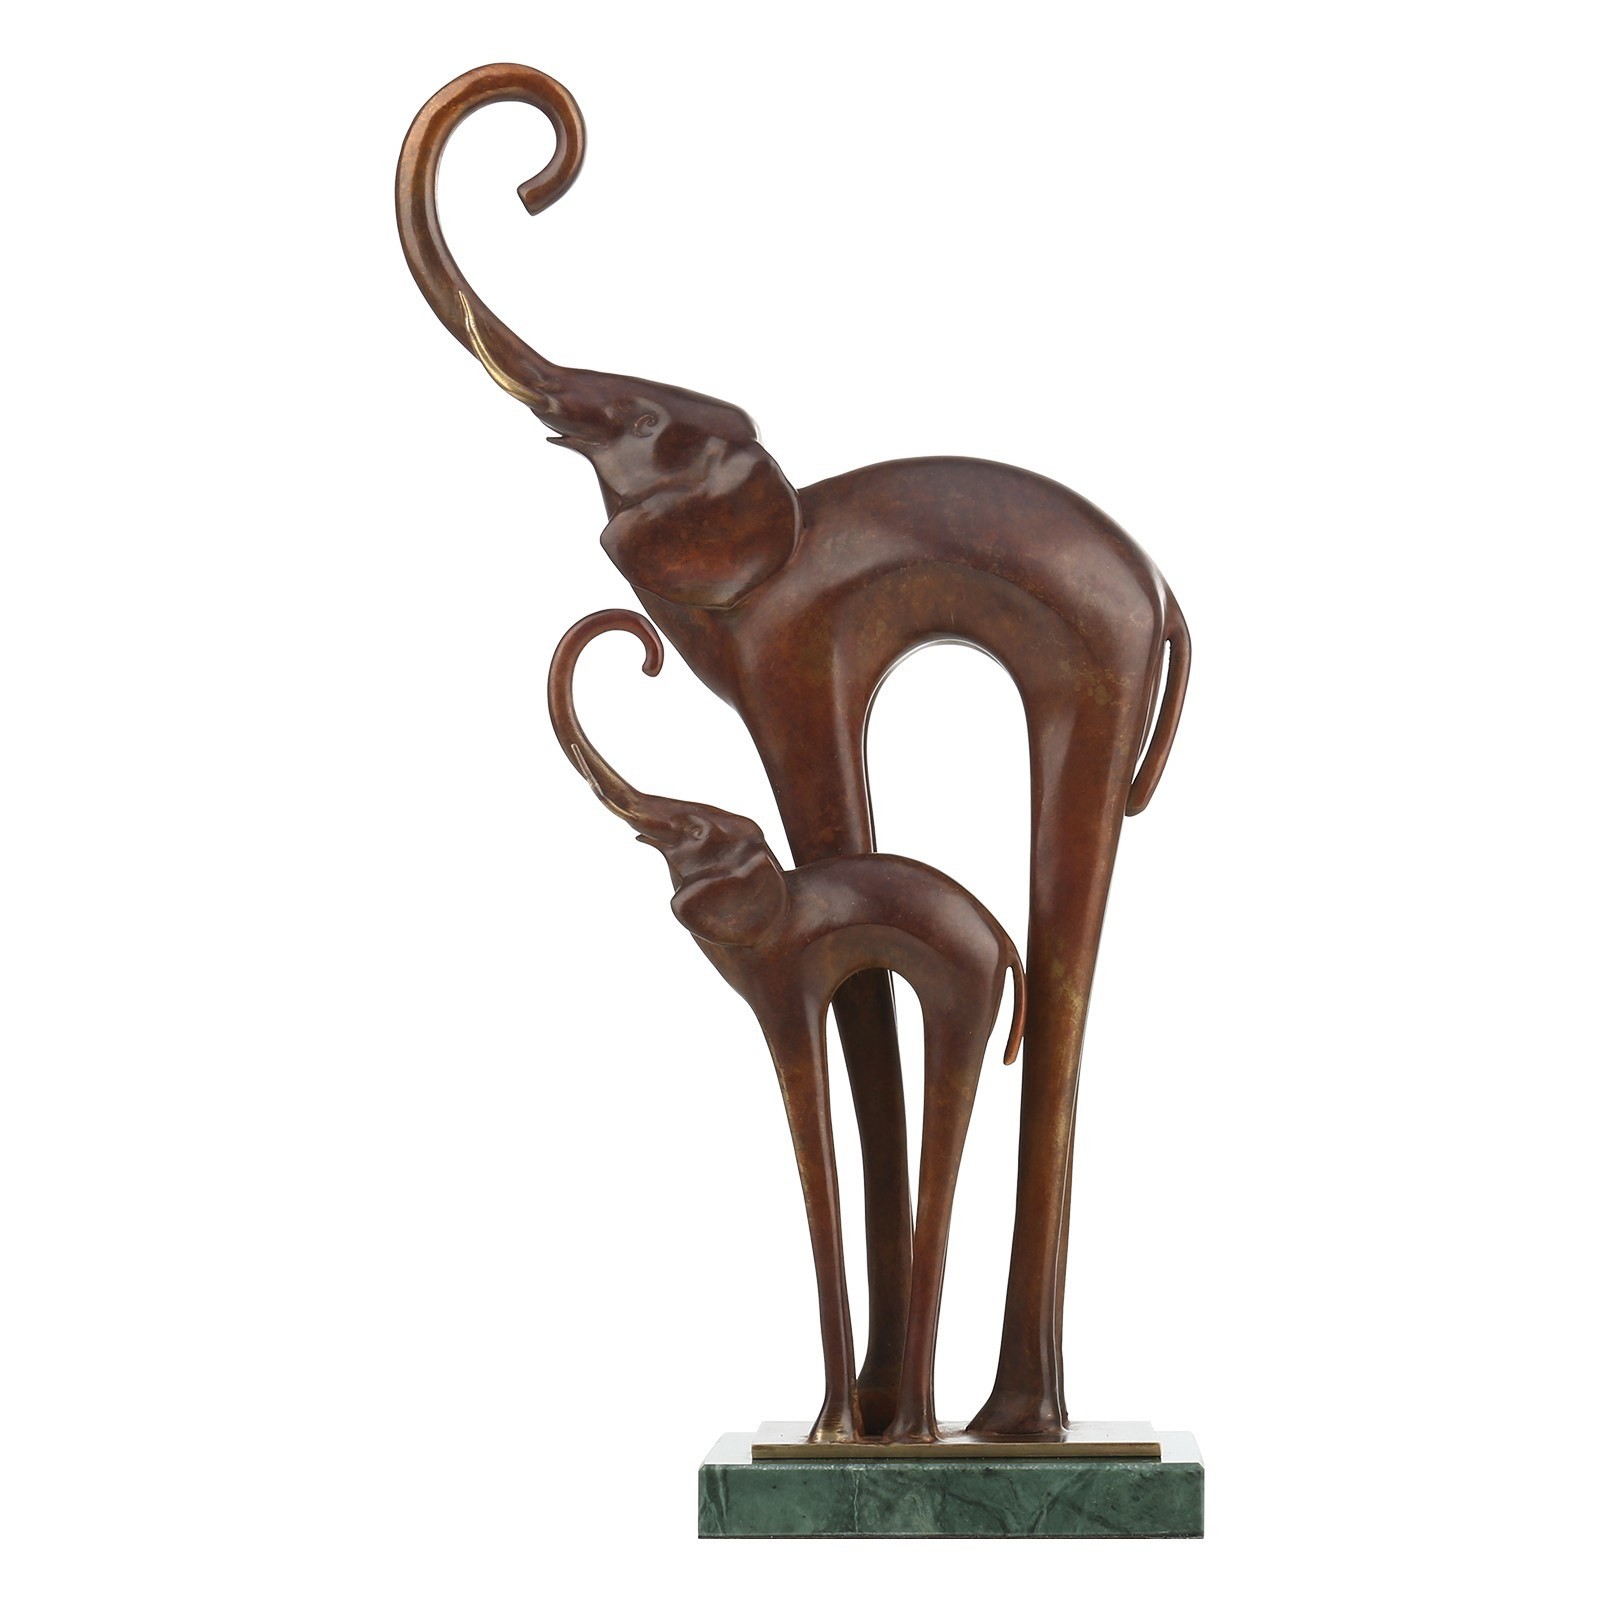 Upea elefantti-norsu messinki patsas on tyylikäs koriste main variant image